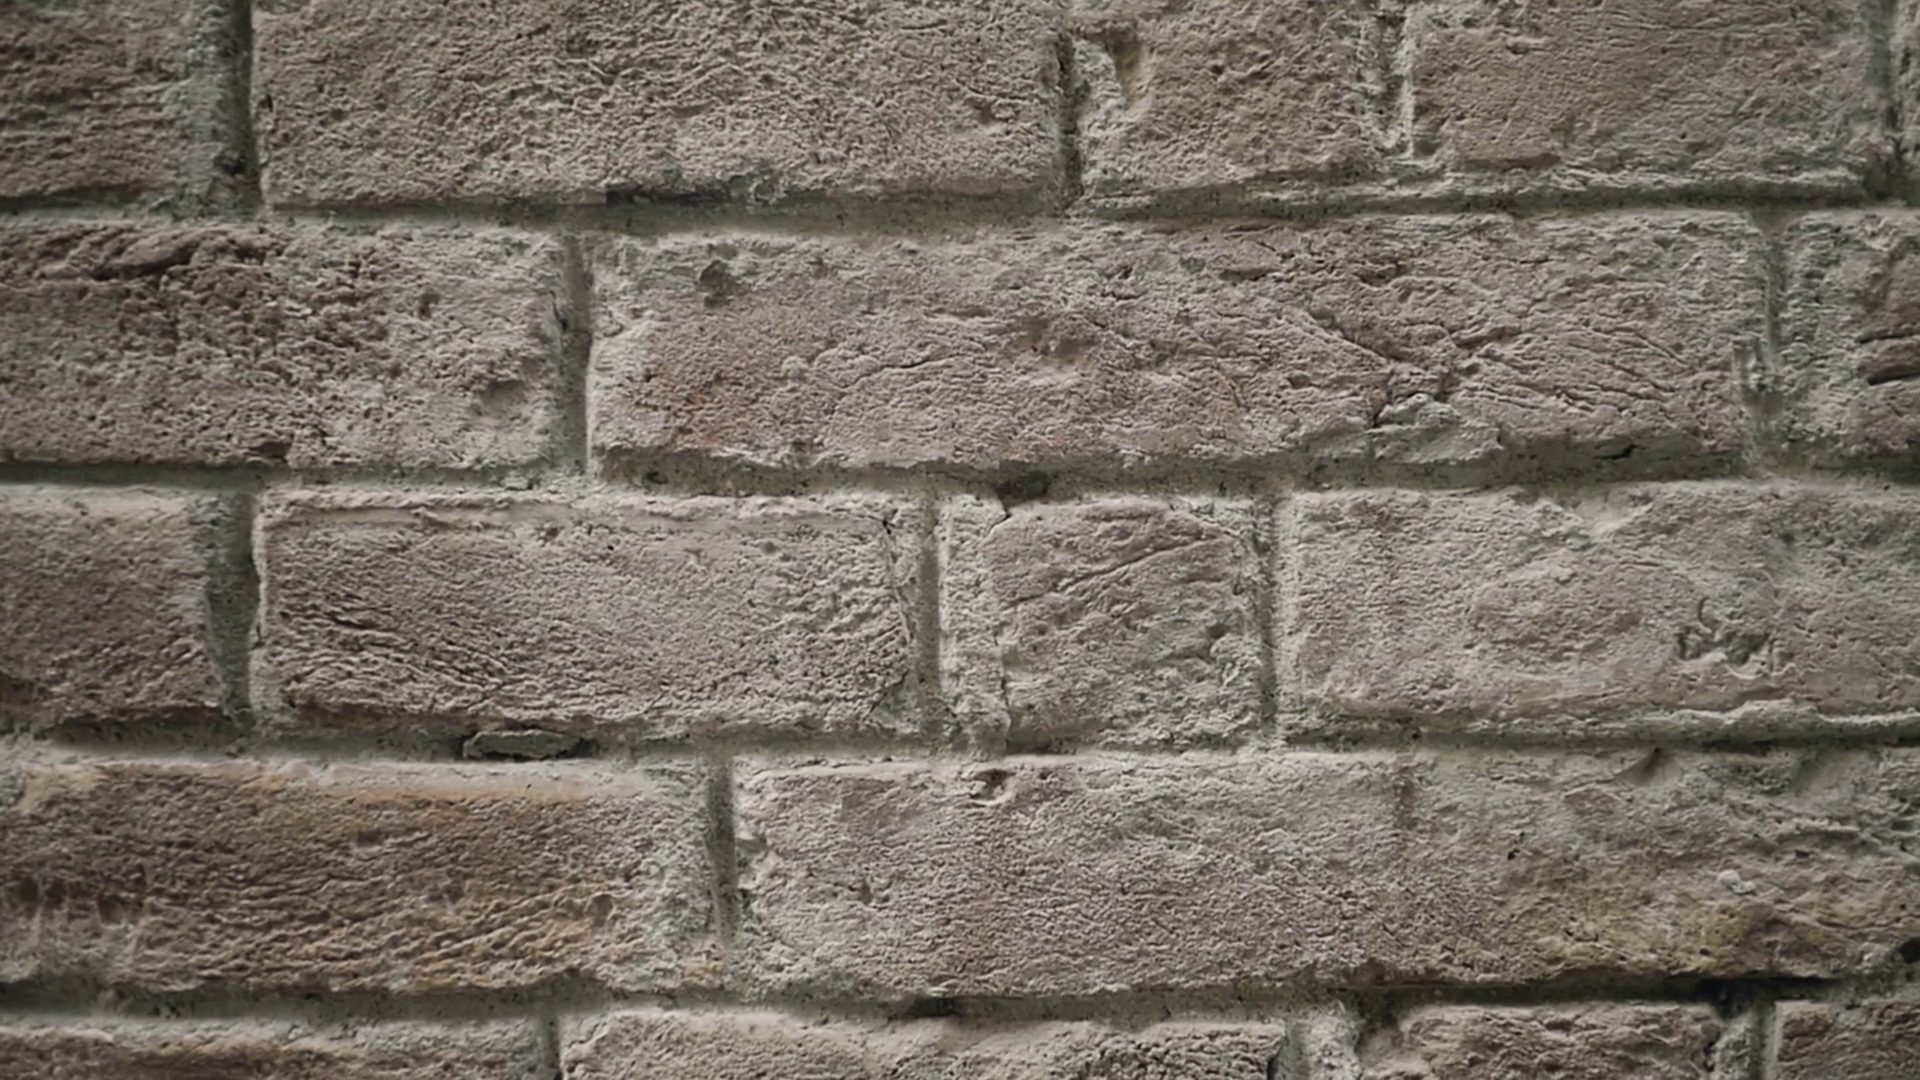 Medium close up handheld shot of bricks cemented in a wall. Stock ...